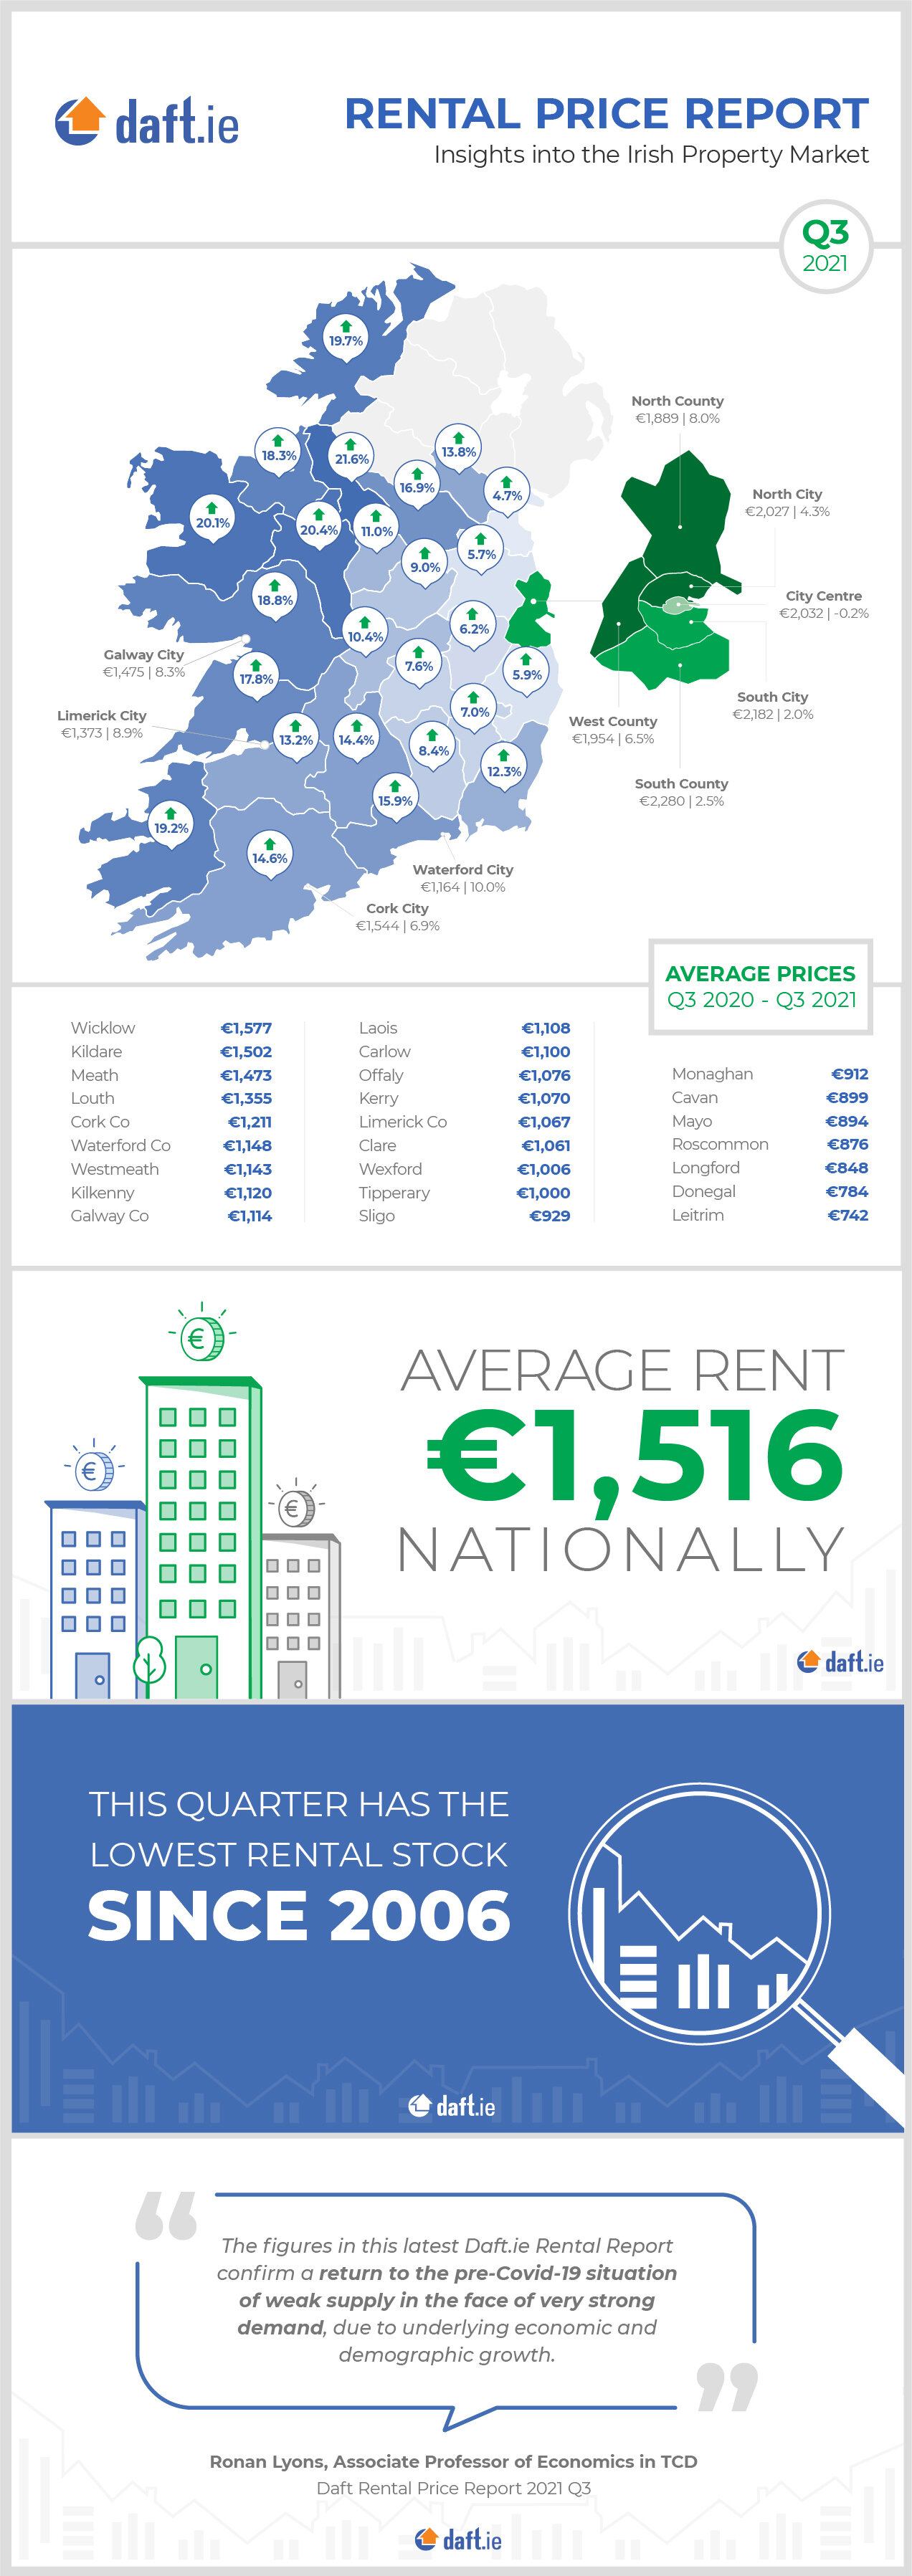 https://www.worldpropertyjournal.com/news-assets/Ireland-Rental-Prices-by-Daft.ie-%28Q3%2C-2021%29.jpg